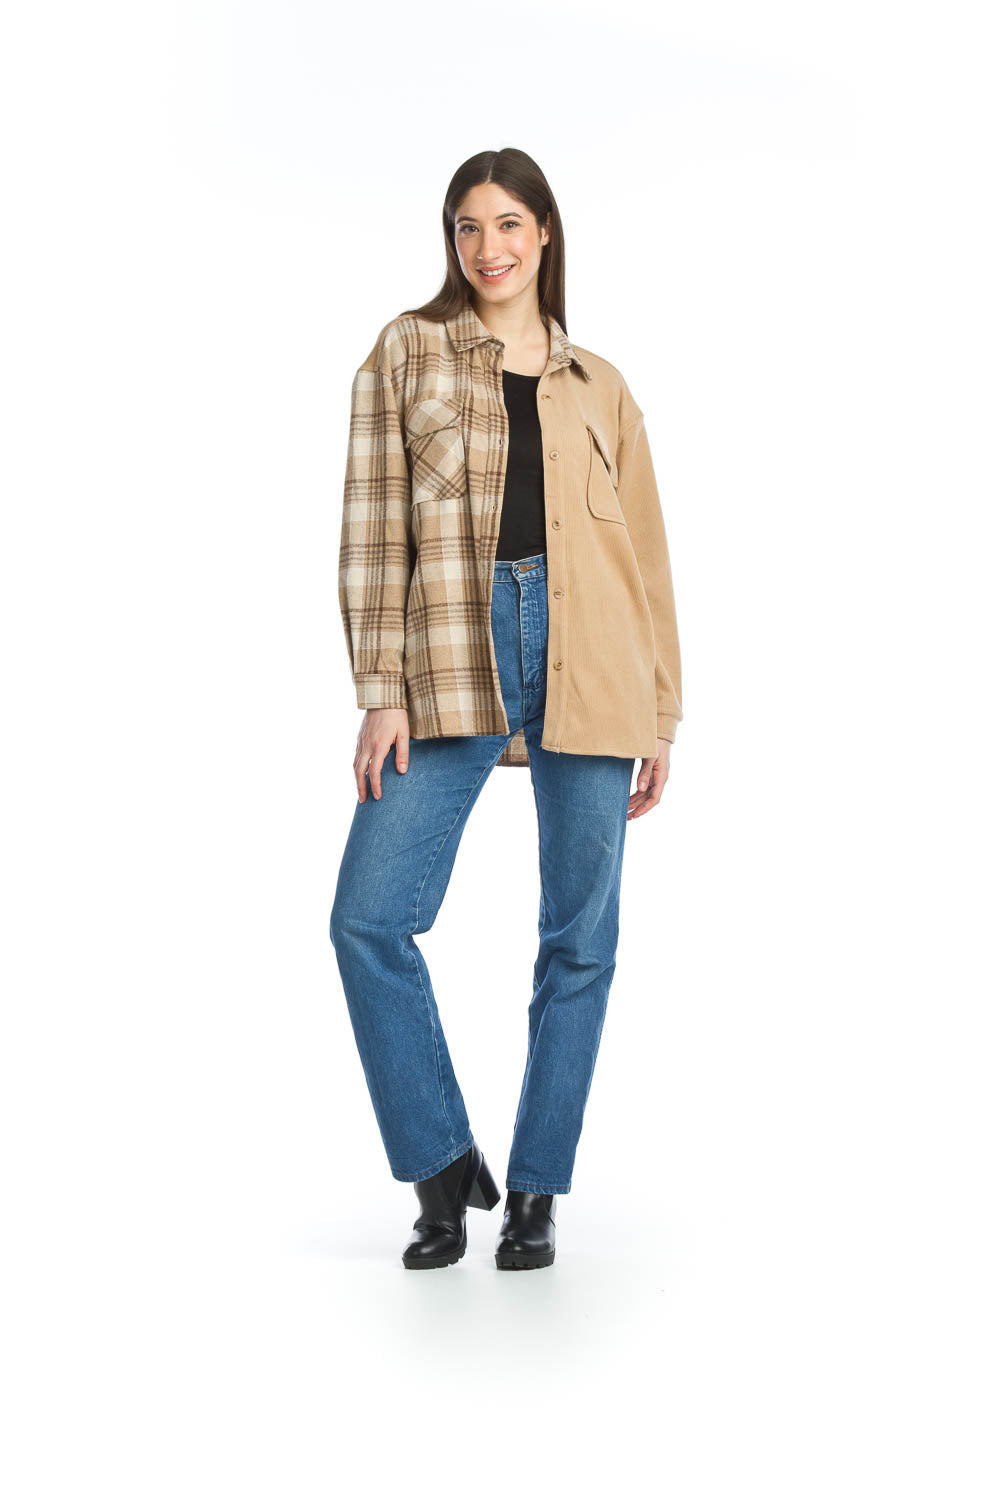 JT-13763 - Camel - Flannel & Soft Corduroy shirt Jacket